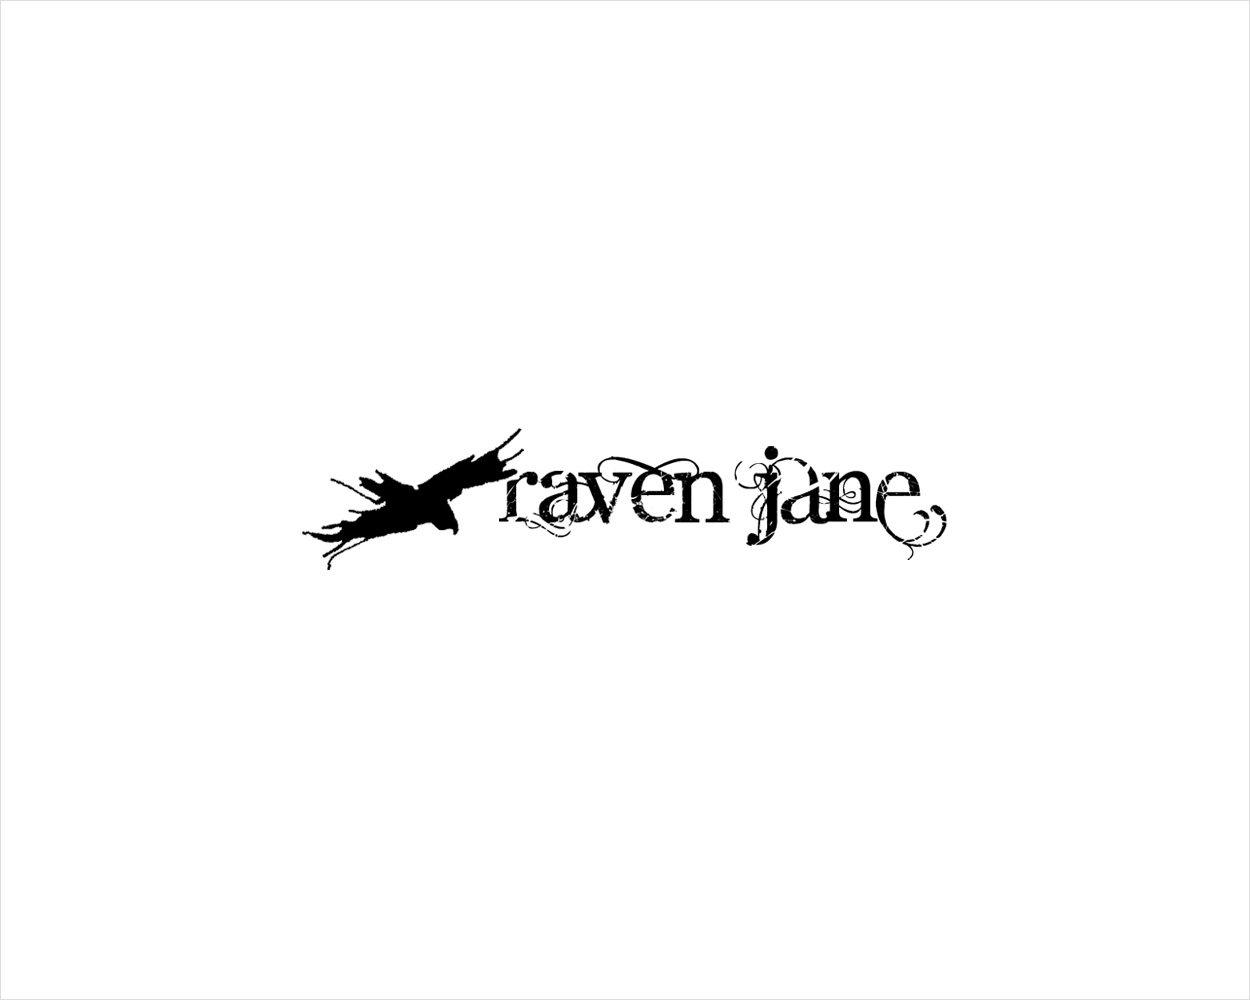 Raven Jane with a black bird